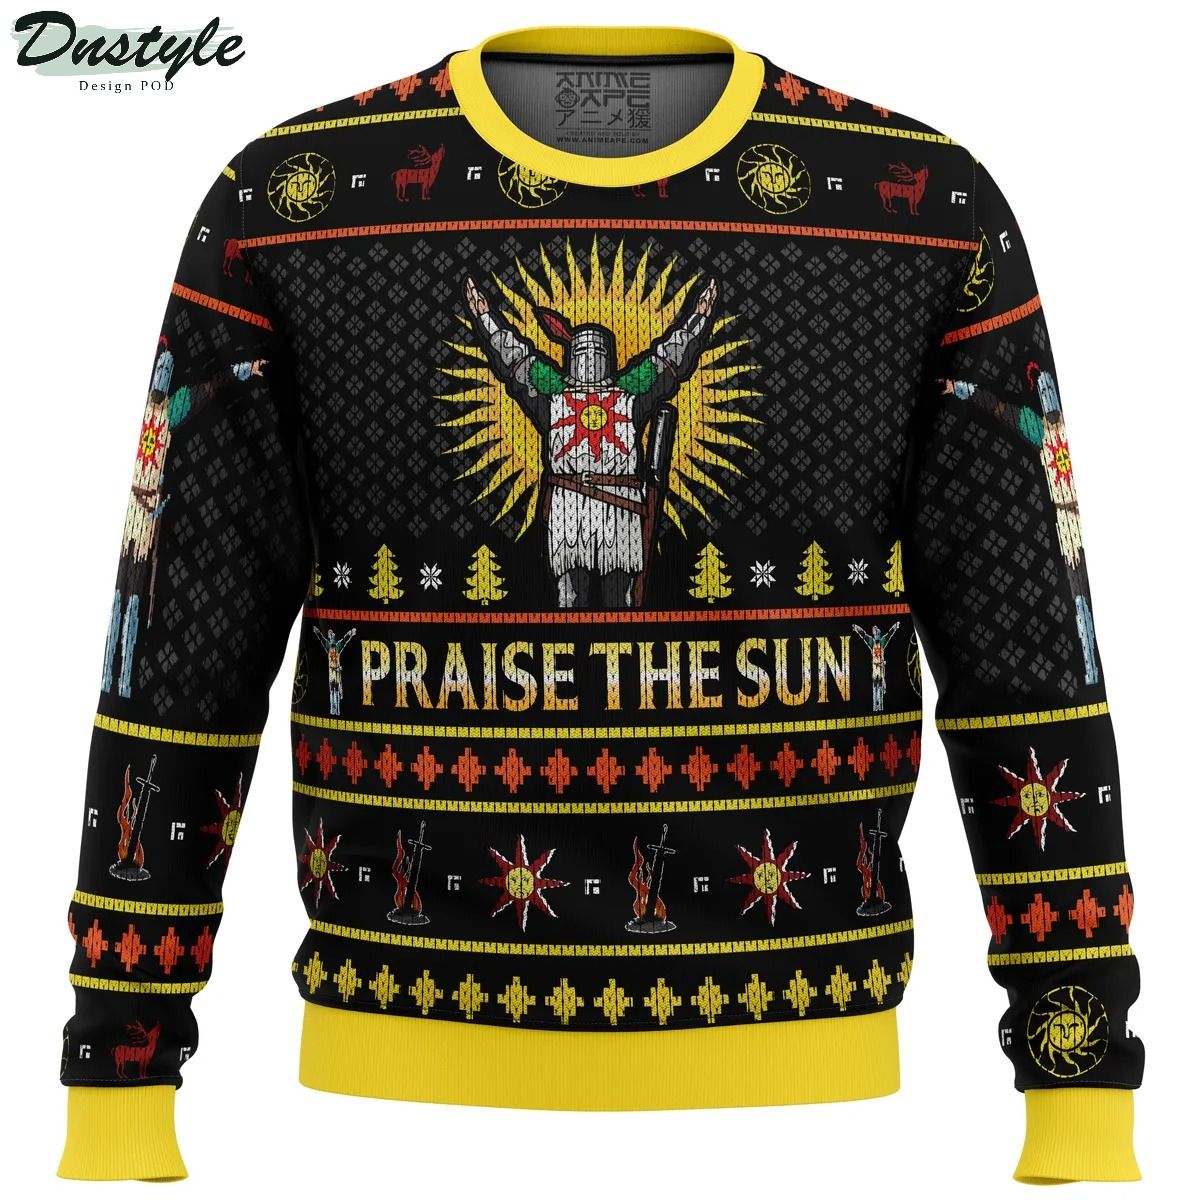 Dark Souls Praise the Sun Ugly Christmas Sweater